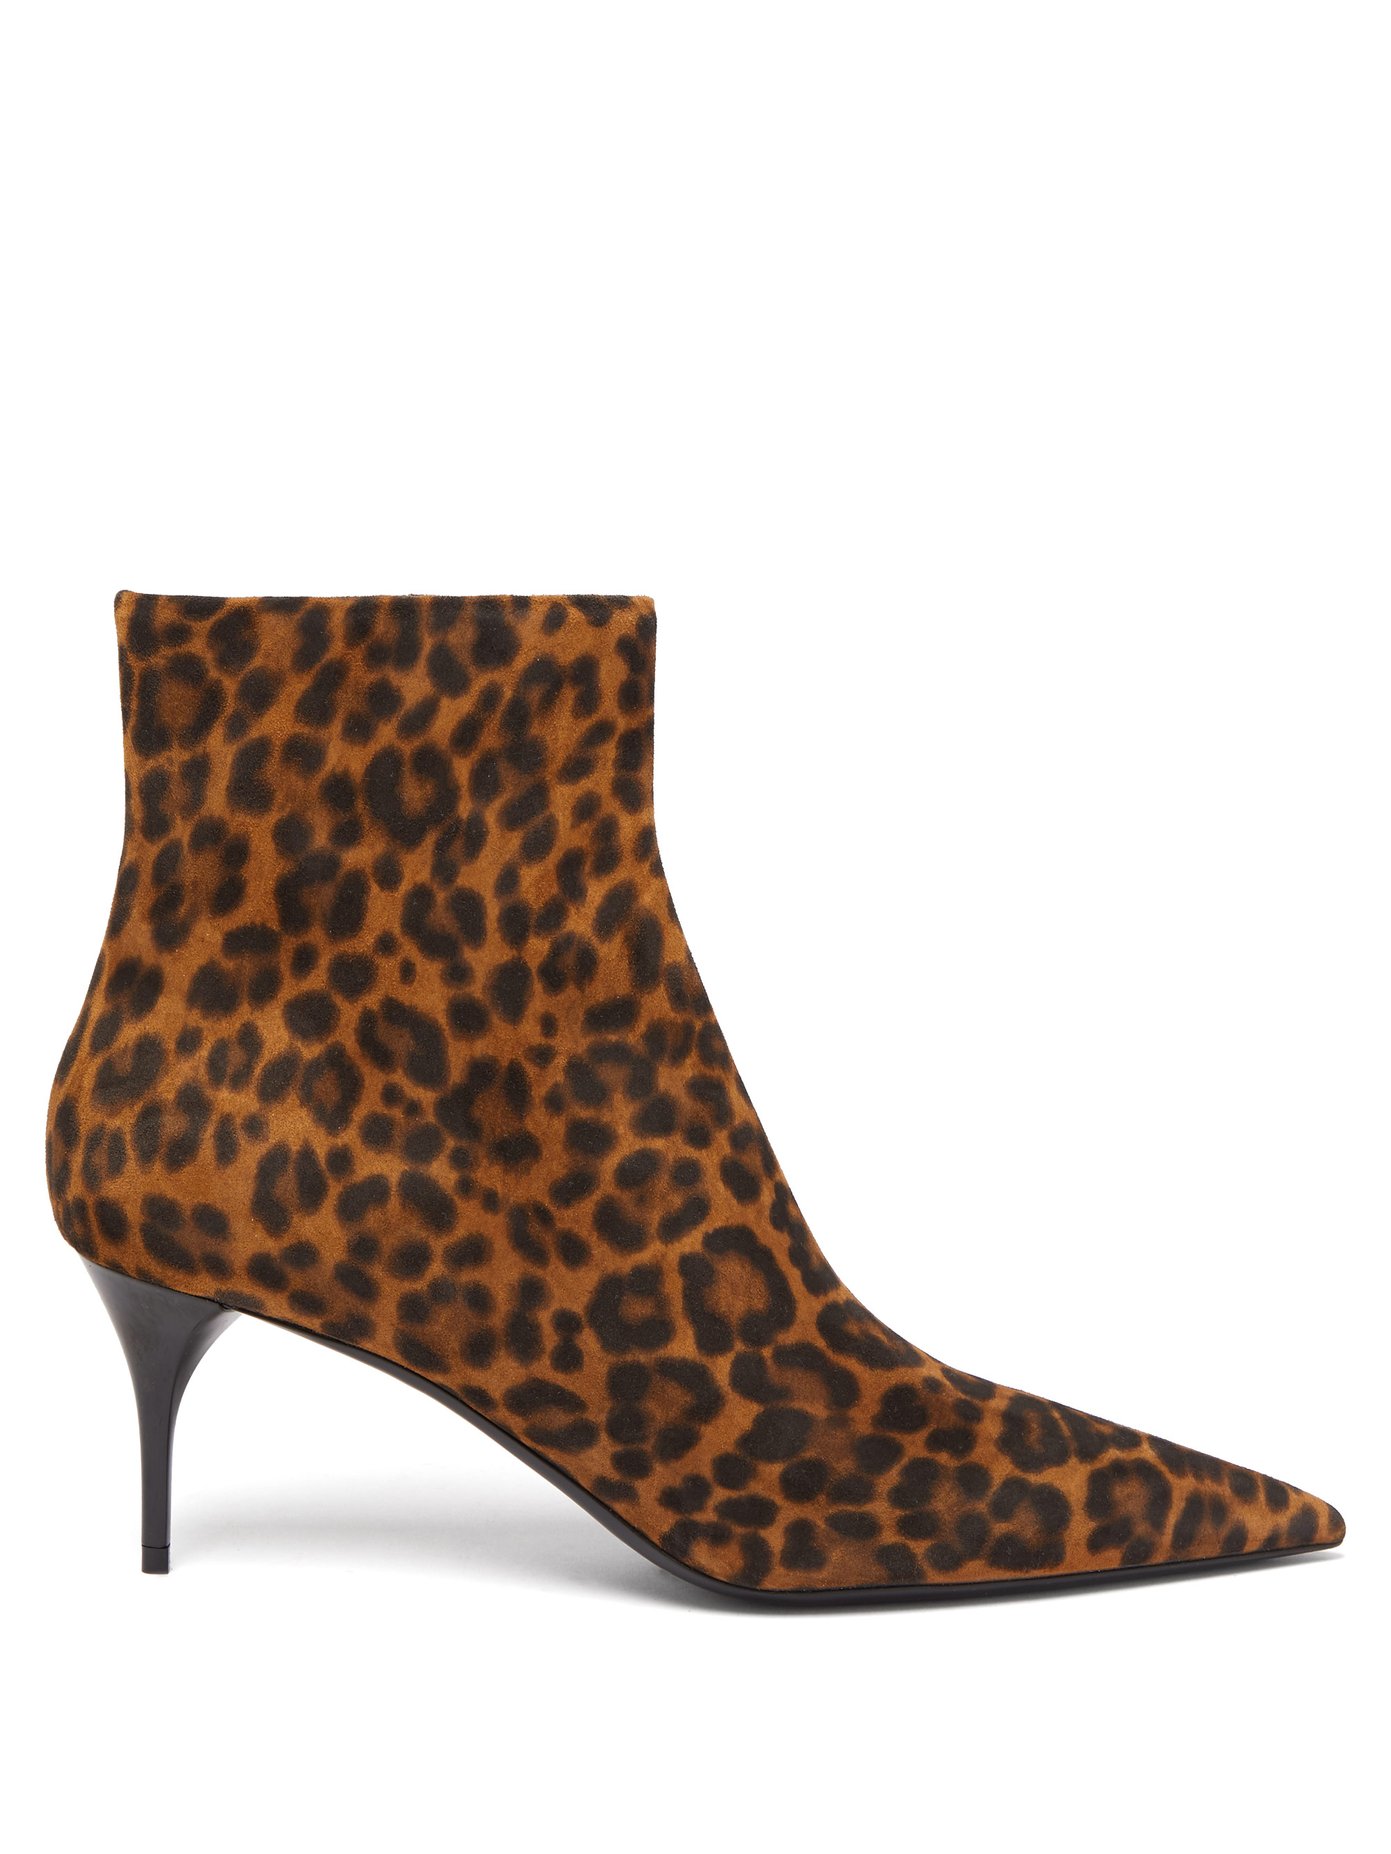 leopard print ankle boots uk